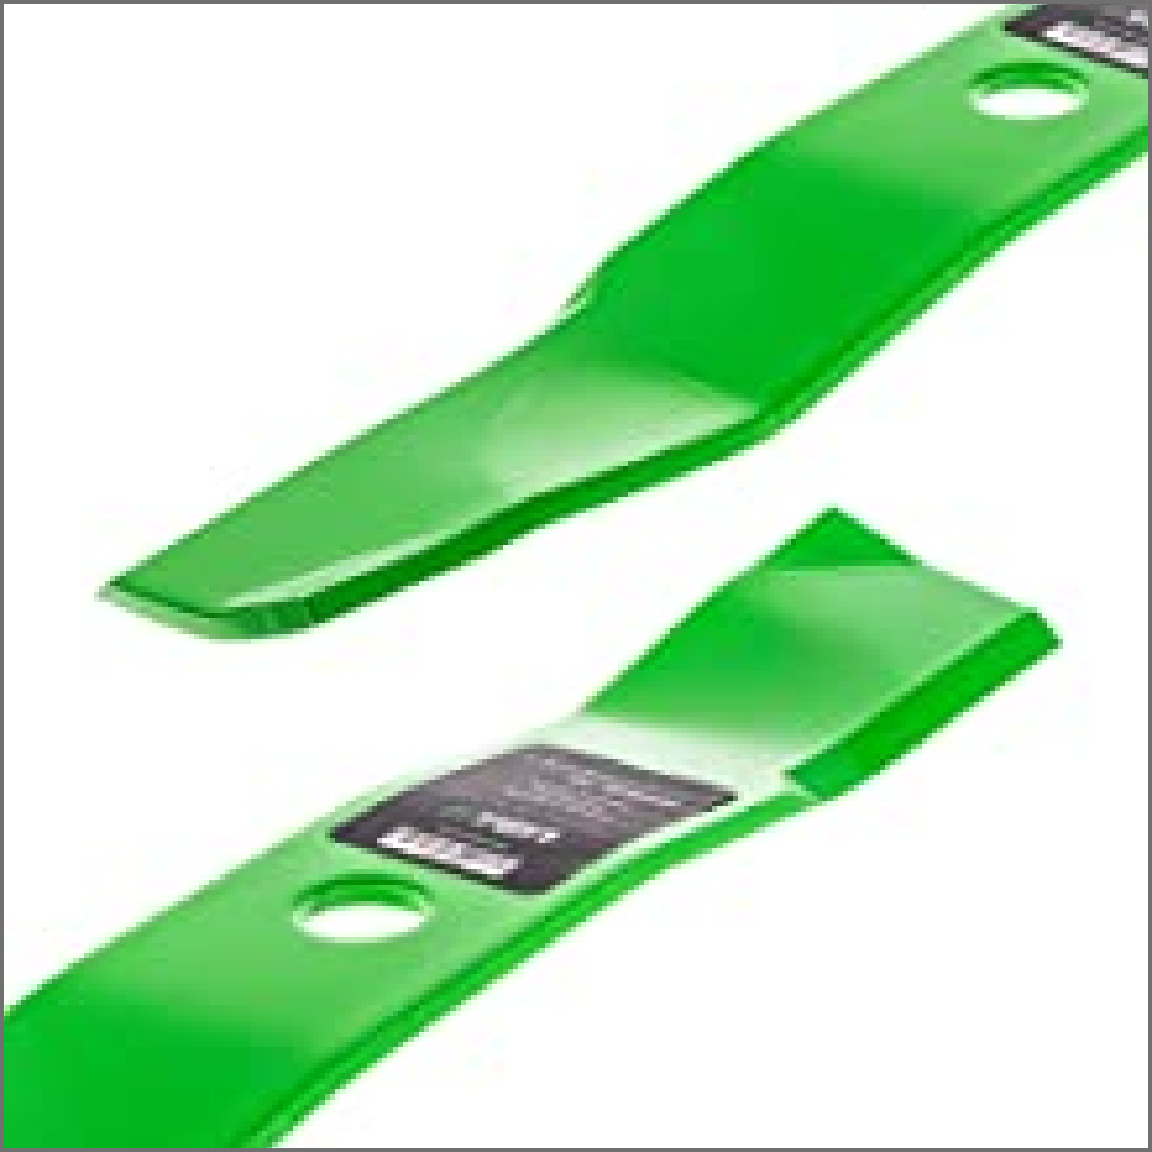 Two Medium-Lift LawnRazor Blades